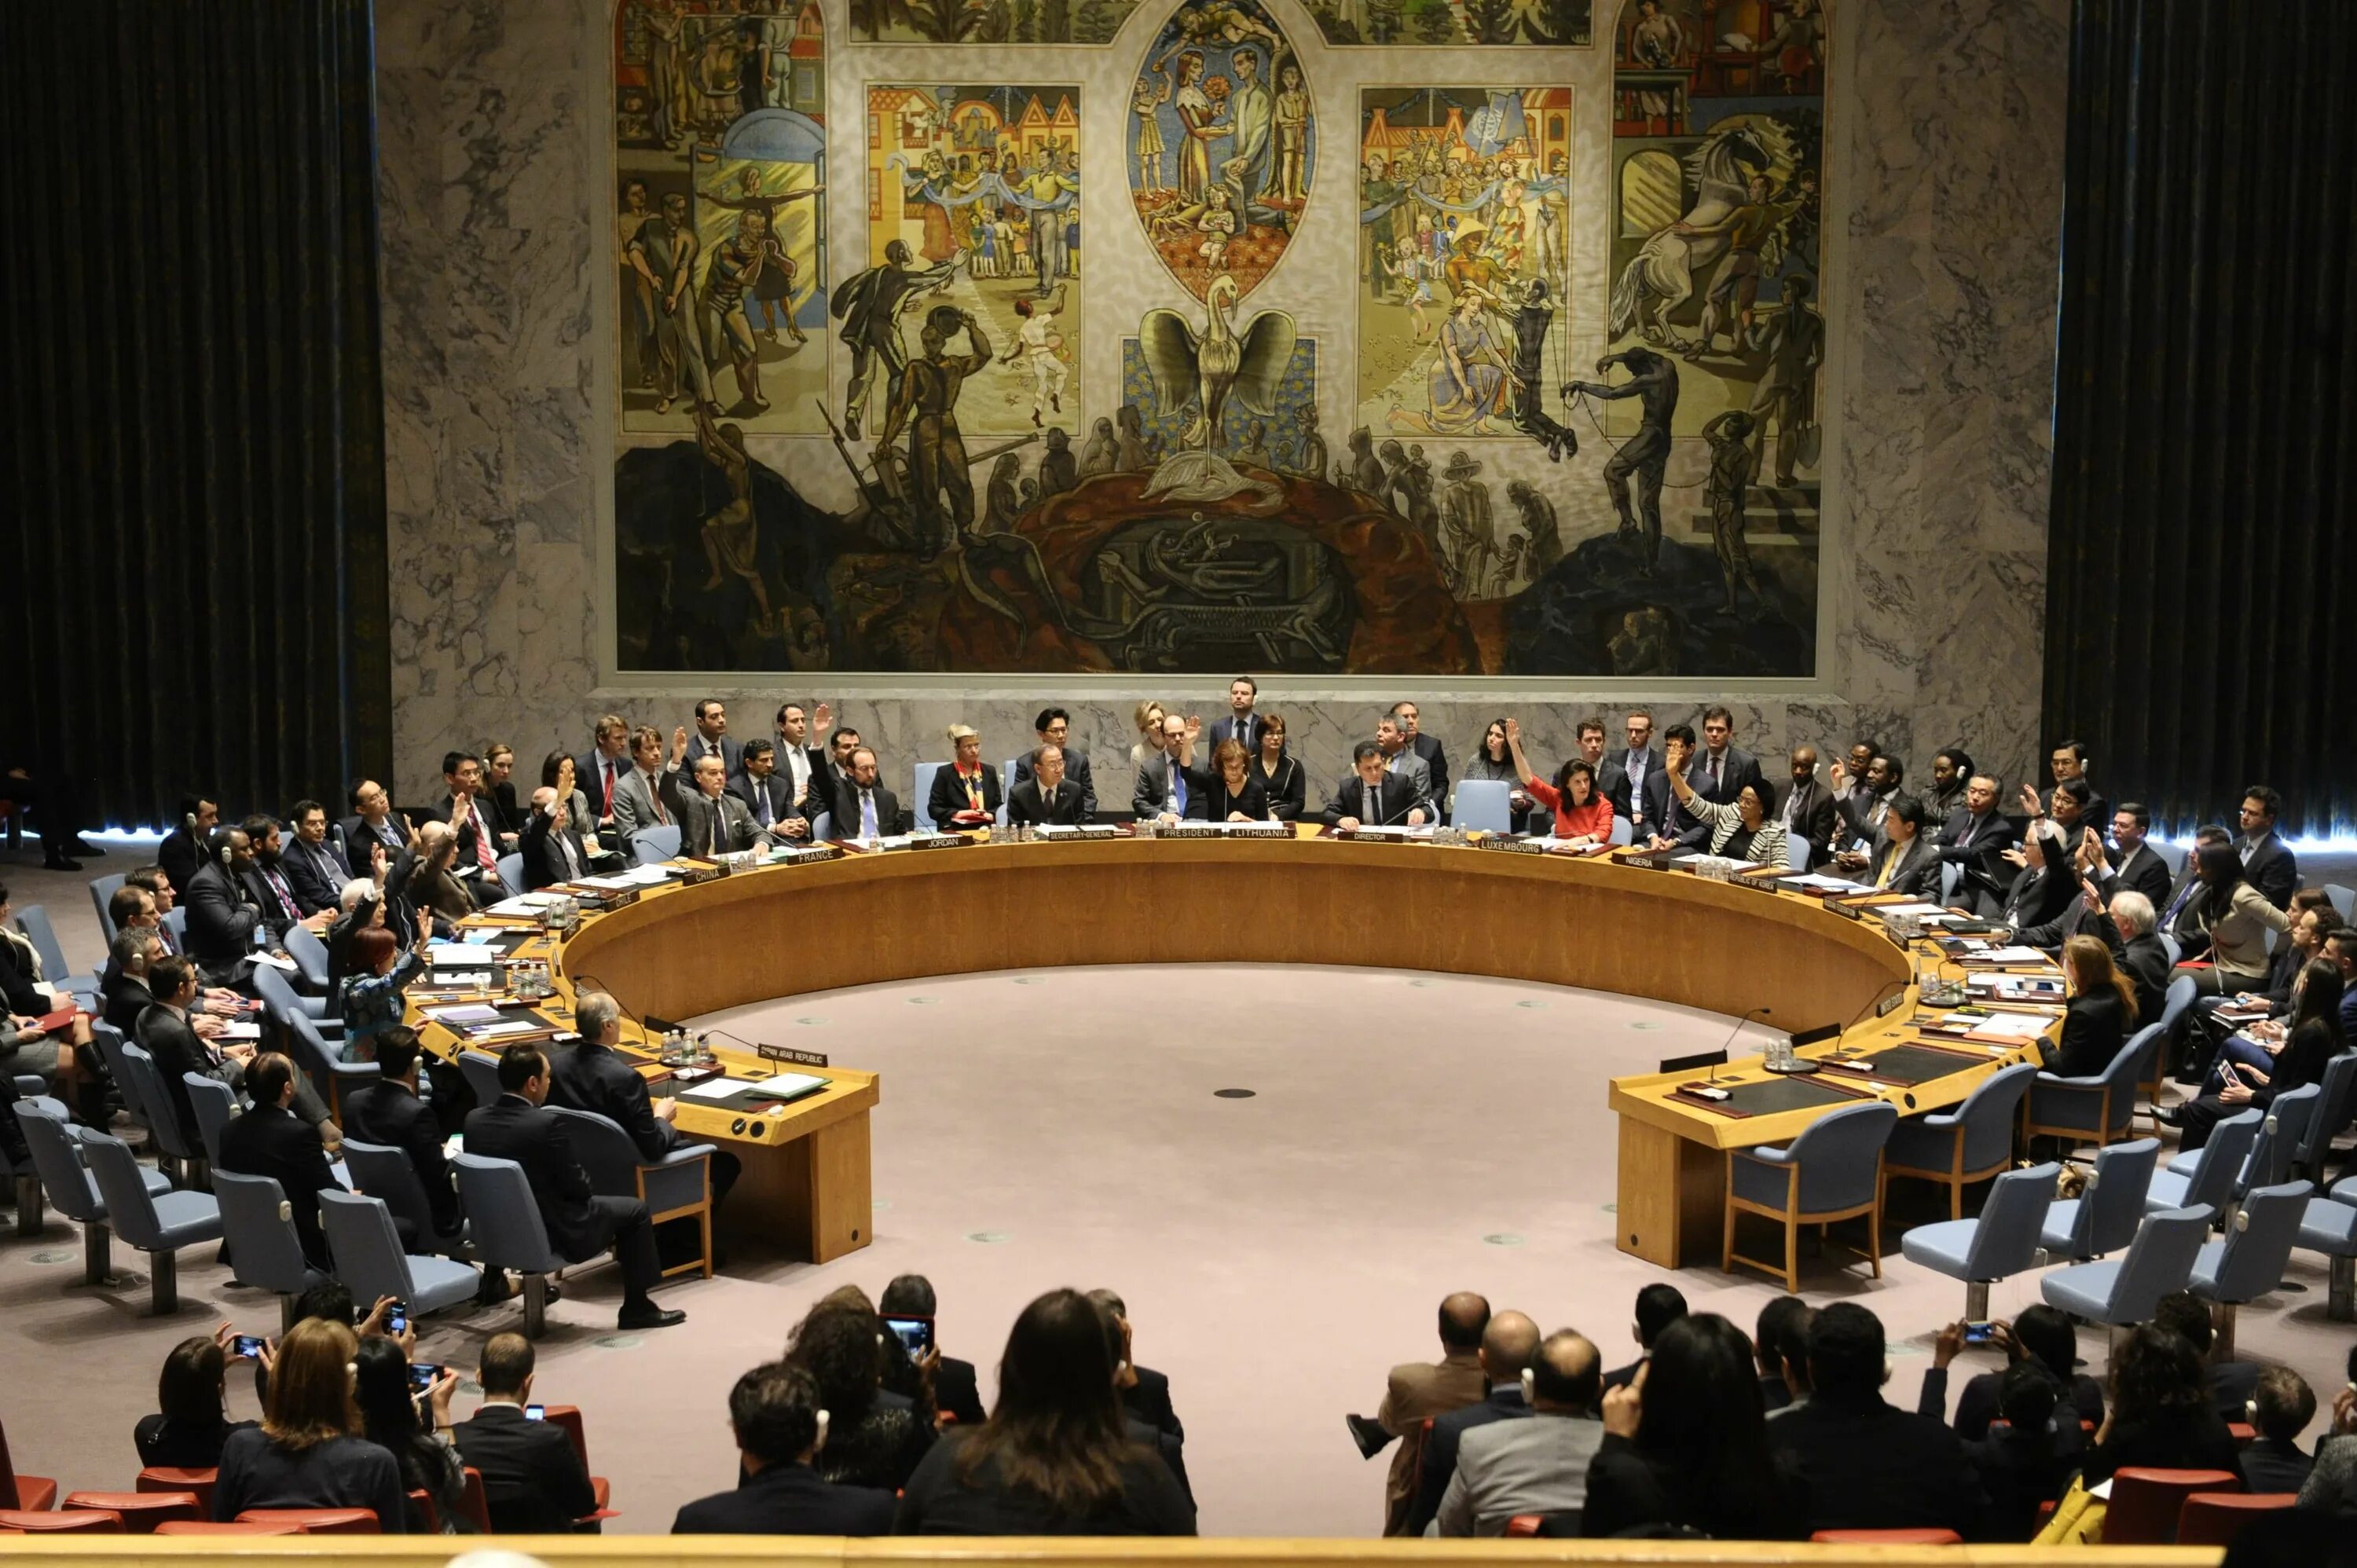 Оон без. Зал совета безопасности ООН. Зал заседаний совета безопасности ООН. Зал заседаний Совбеза ООН. Заседание совета безопасности ООН.